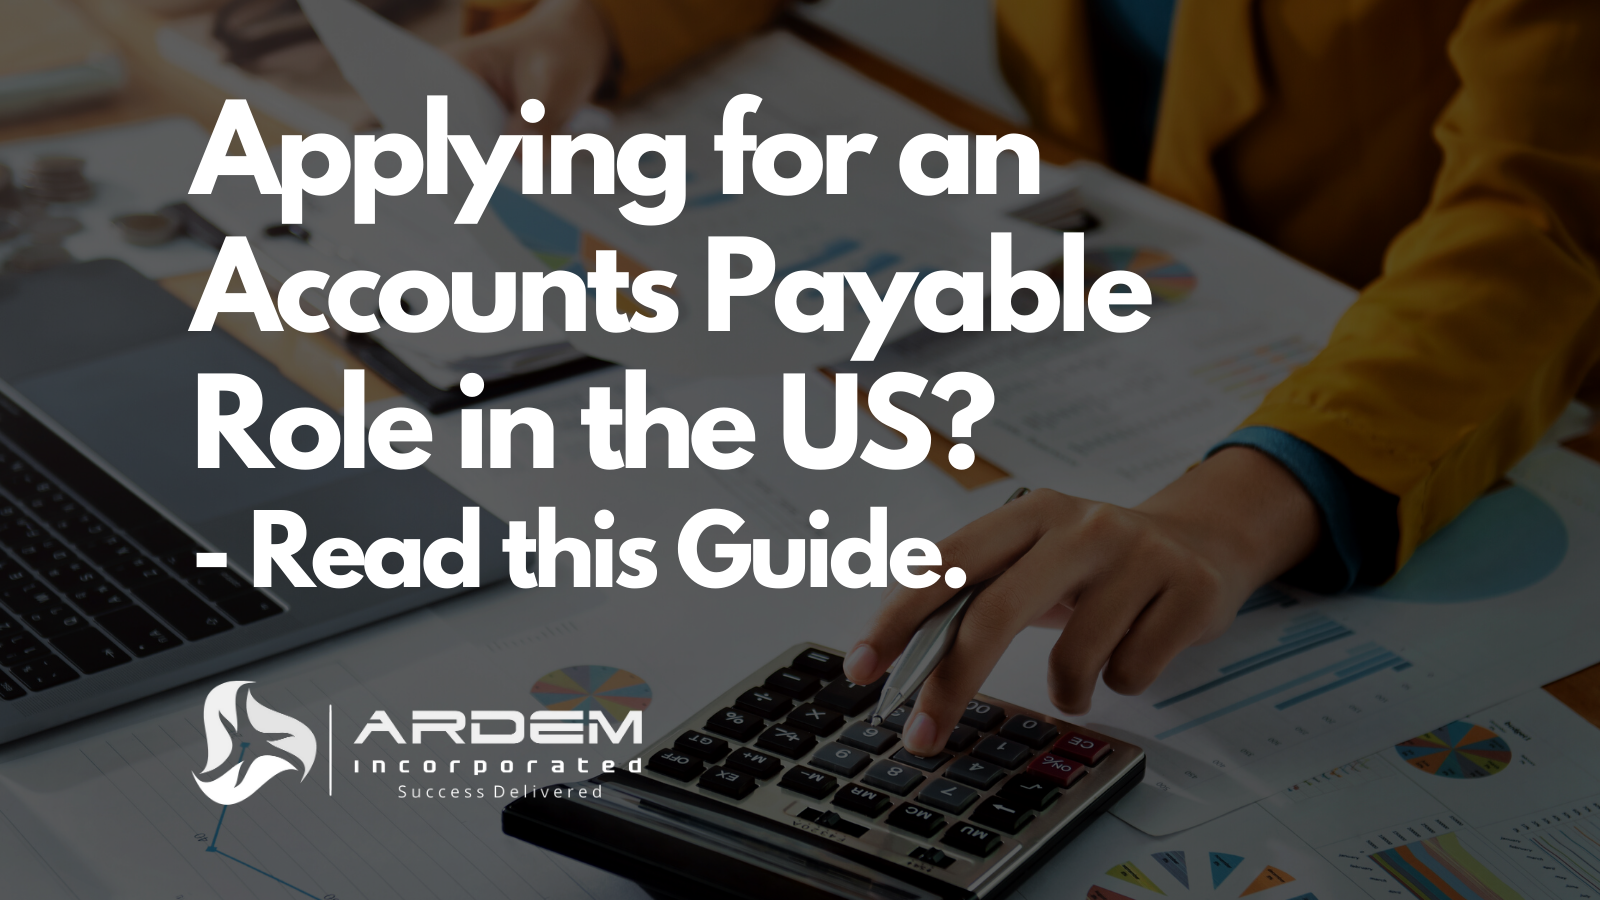 Accounts Payable Outsourcing Service Blog